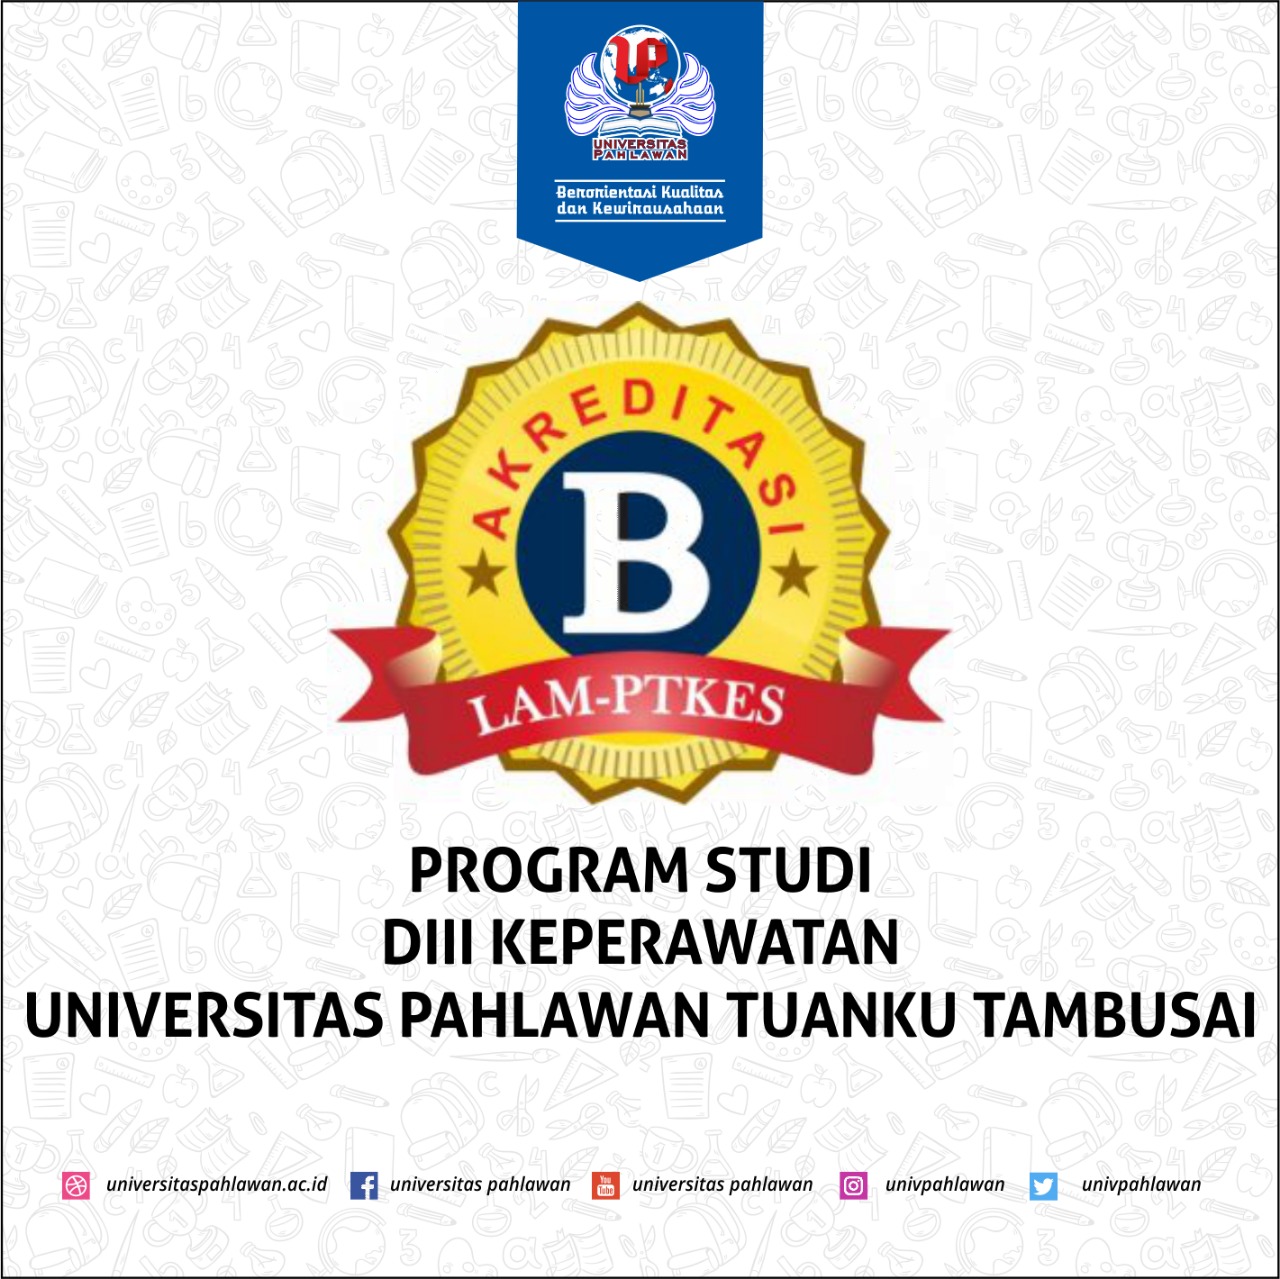 Program Studi Diploma 3 (DIII) Keperawatan Dapatkan Nilai Akreditasi B Dari LAM-PTKes